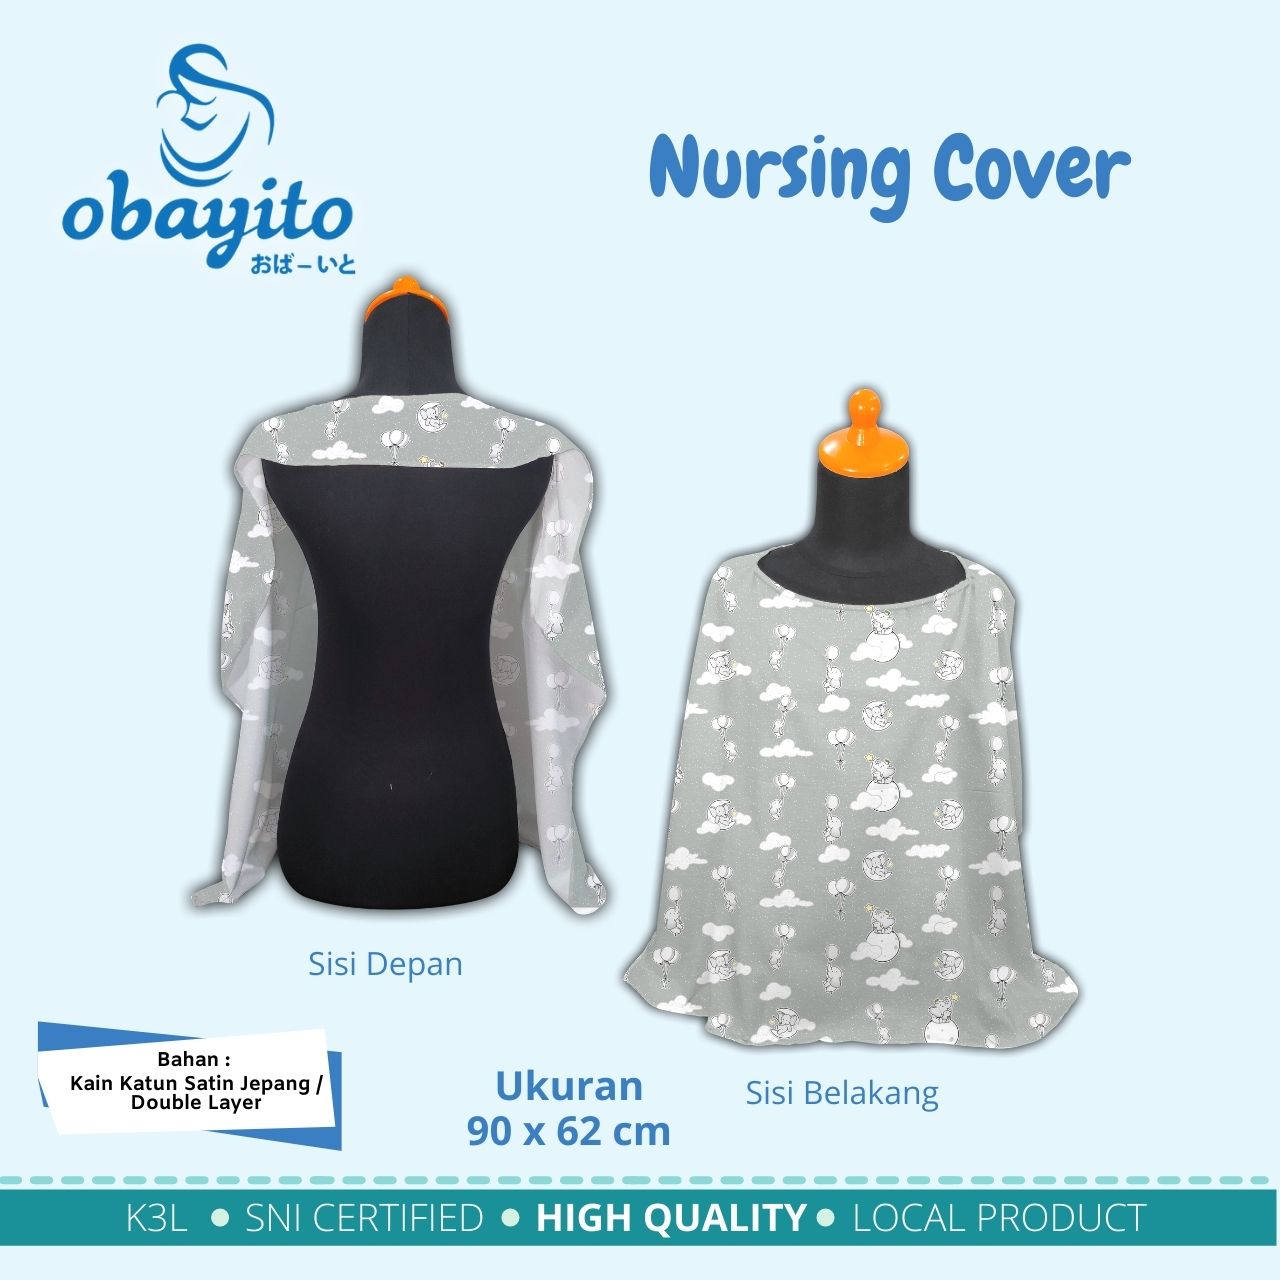 Detail Nursing Cover dari obayito